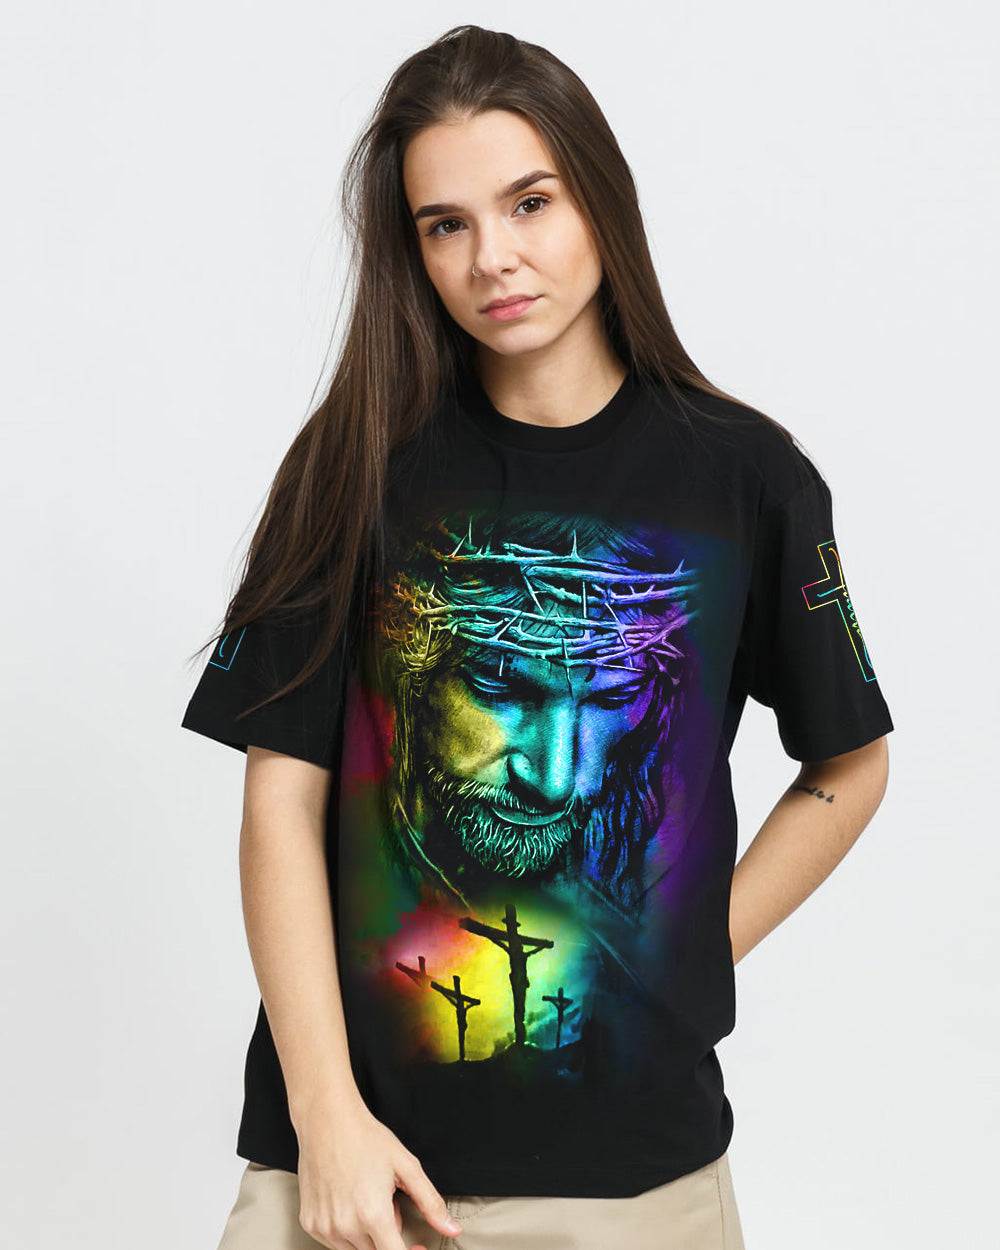 Way Maker Miracle Worker Rainbow Painting Jesus Women's Christian Tshirt